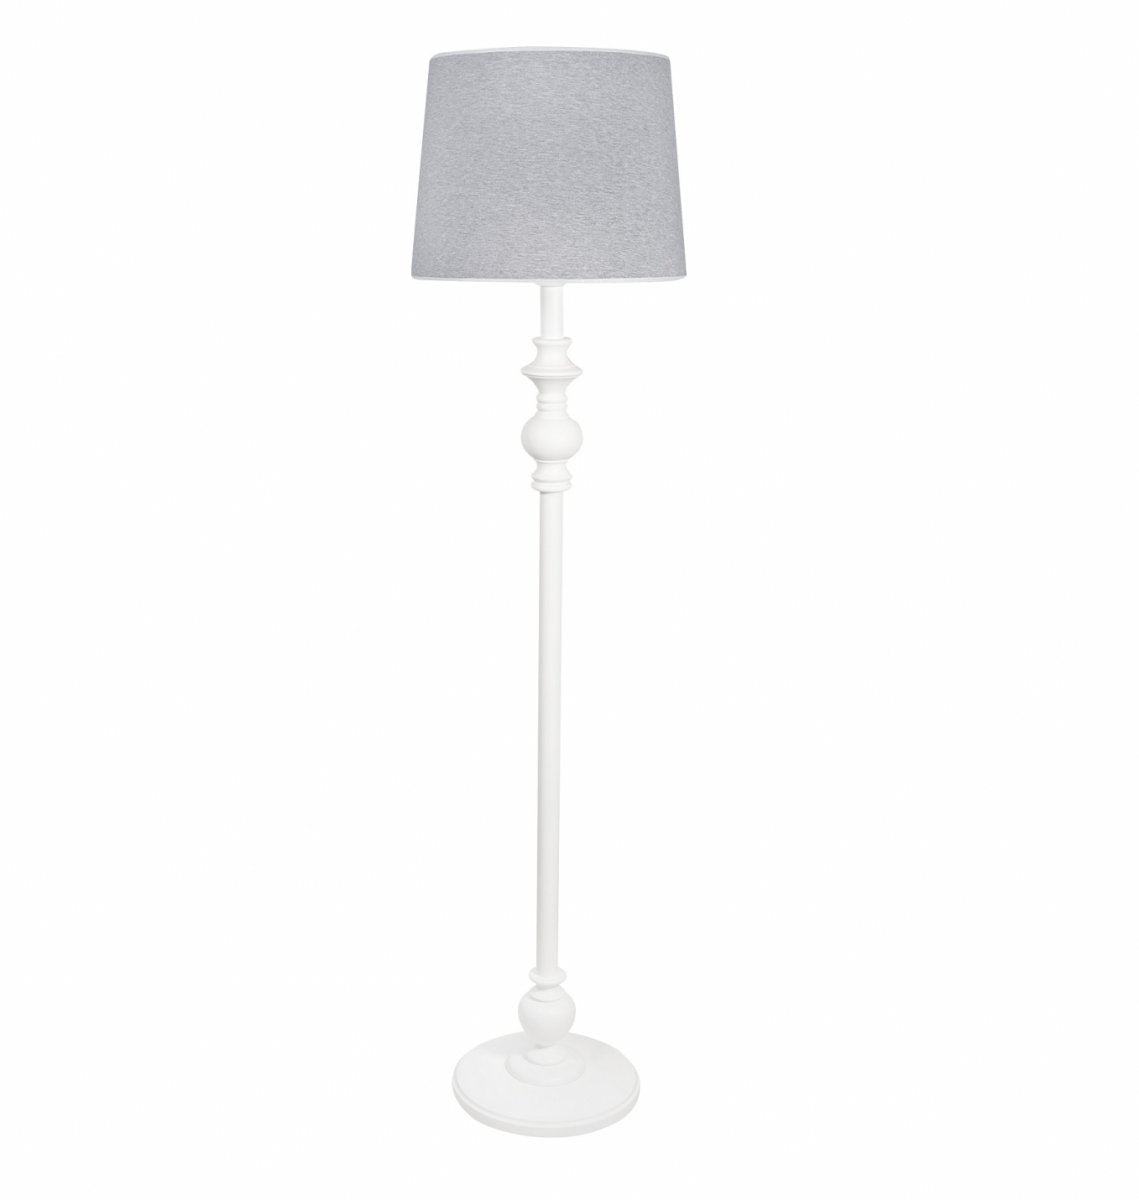 Grey Floor Lamp with Decorative Leg